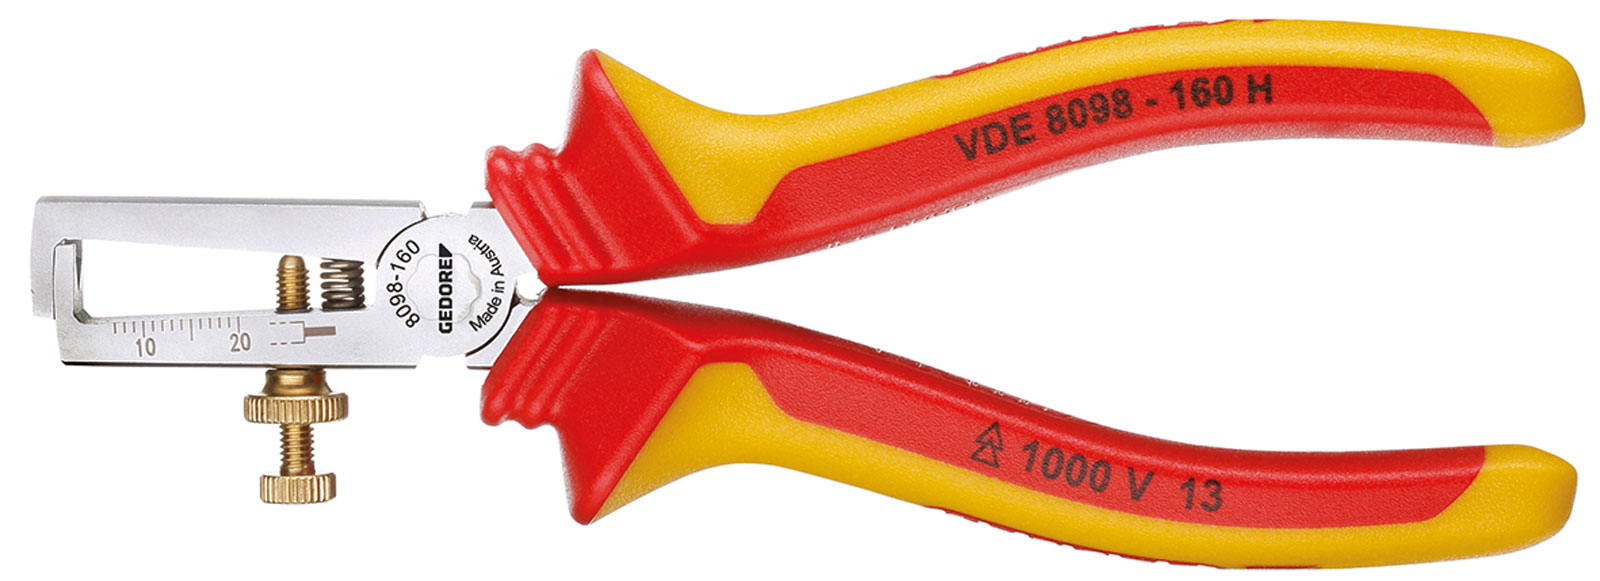 Image de VDE 8098-160 H VDE-Abisolierzange mit Hüllenisolierung 160 mm